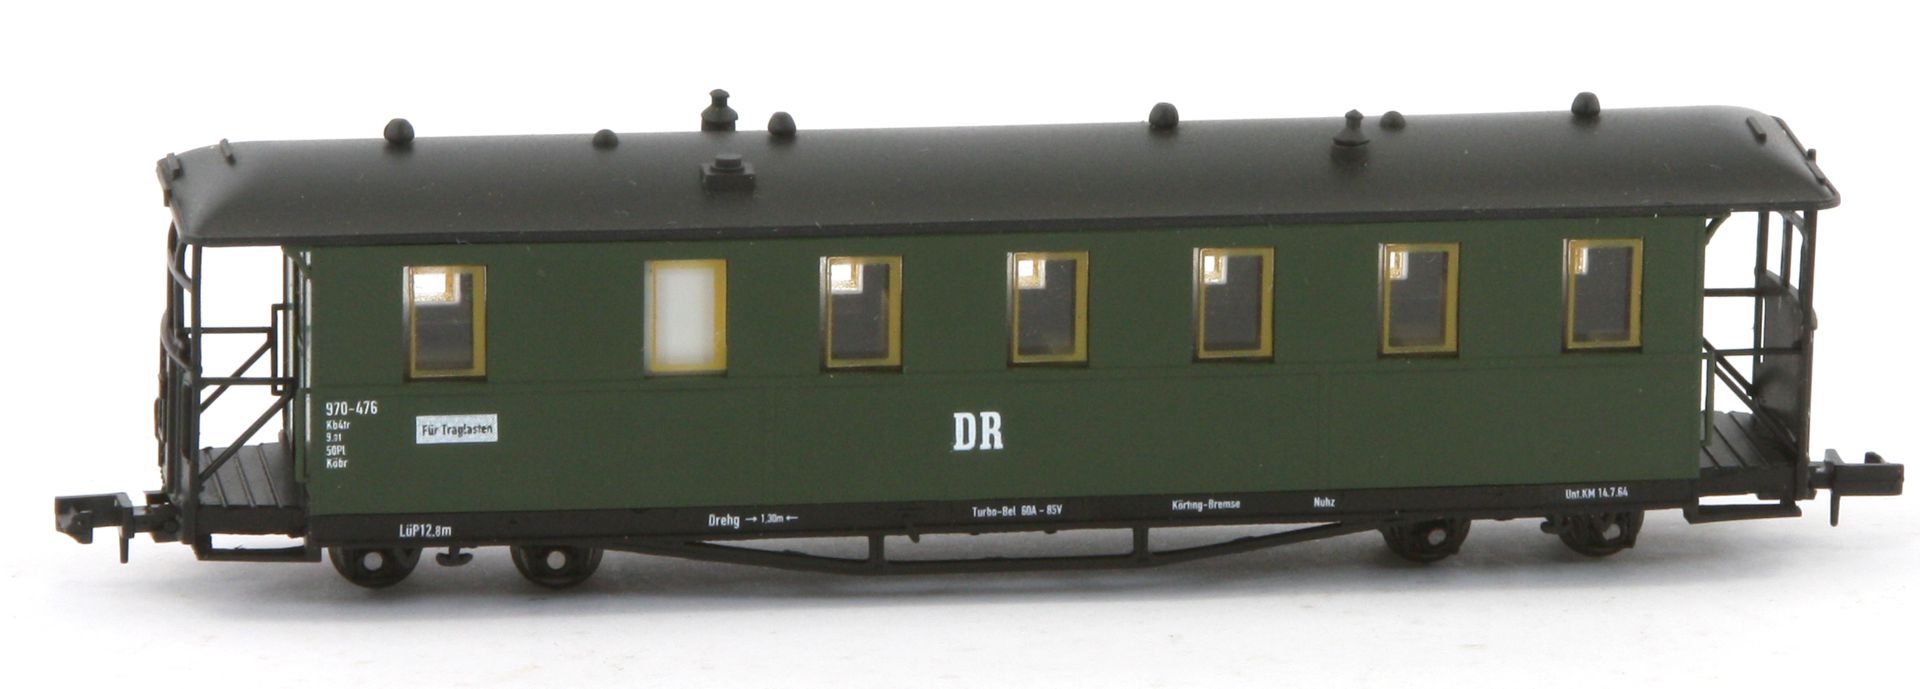 Karsei 29017 - Traglastenwagen KB4tr, DR, Ep.III-IV, 970-476